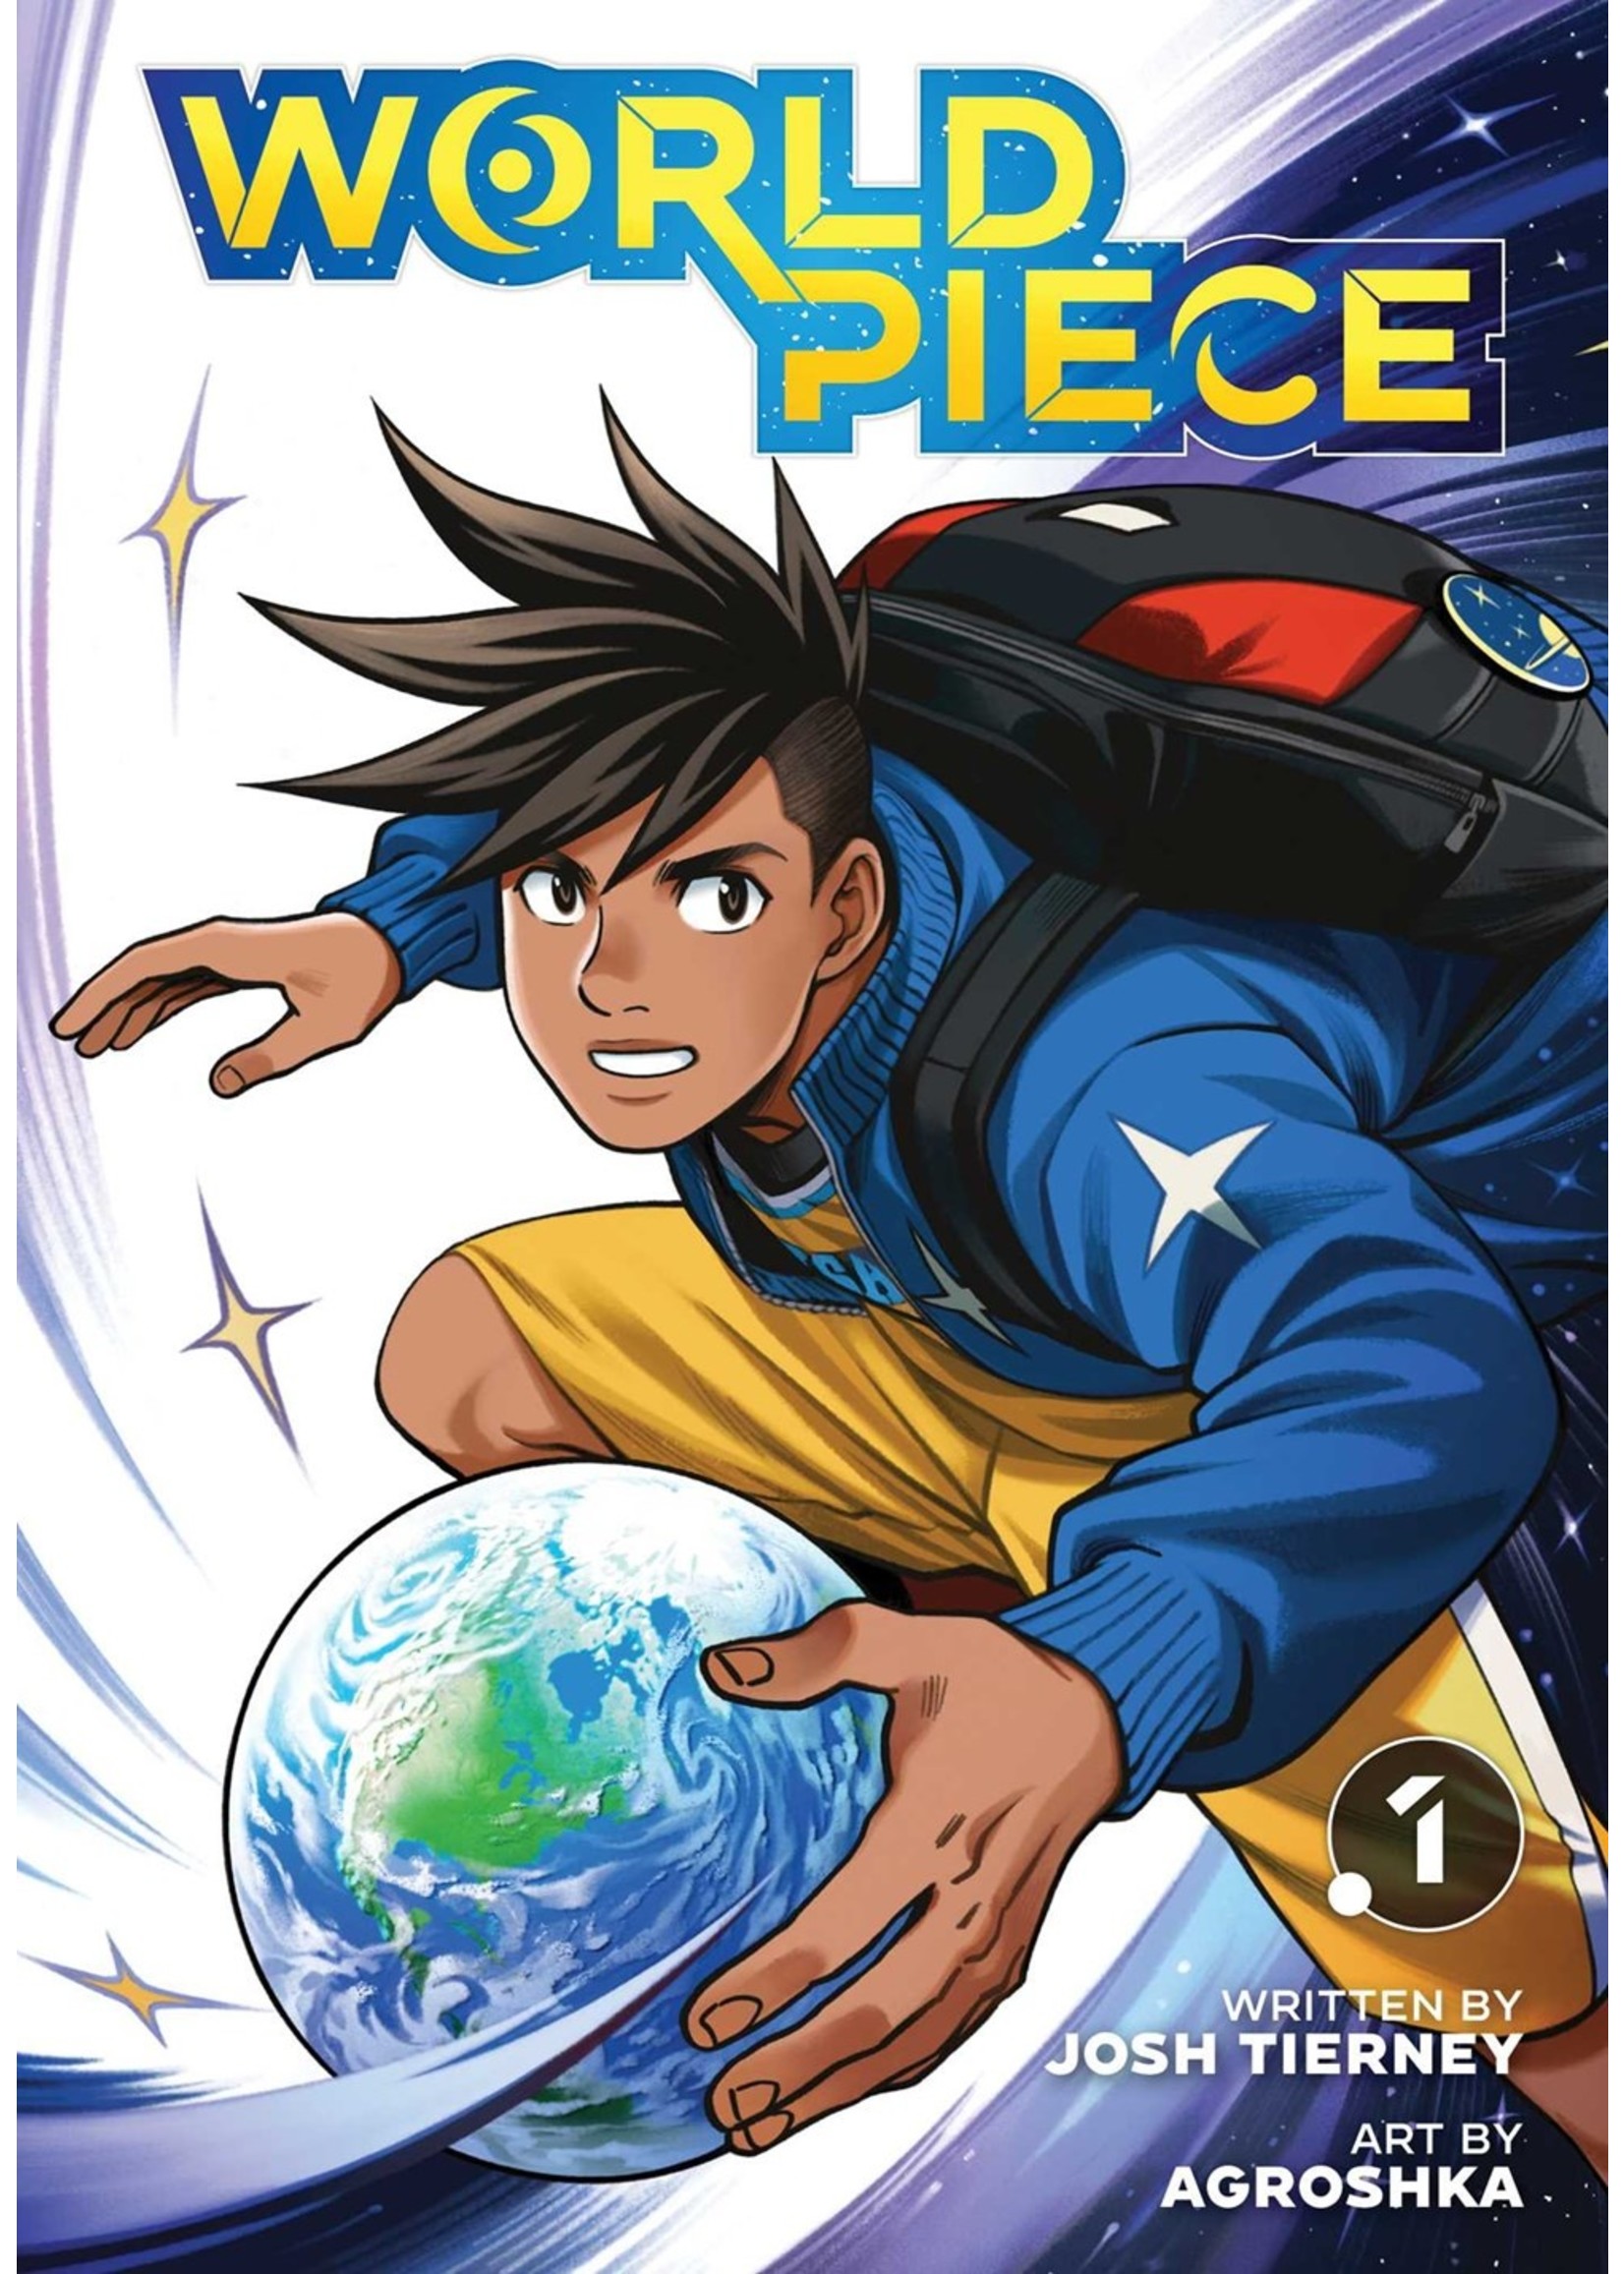 Manga WORLD PIECE V1